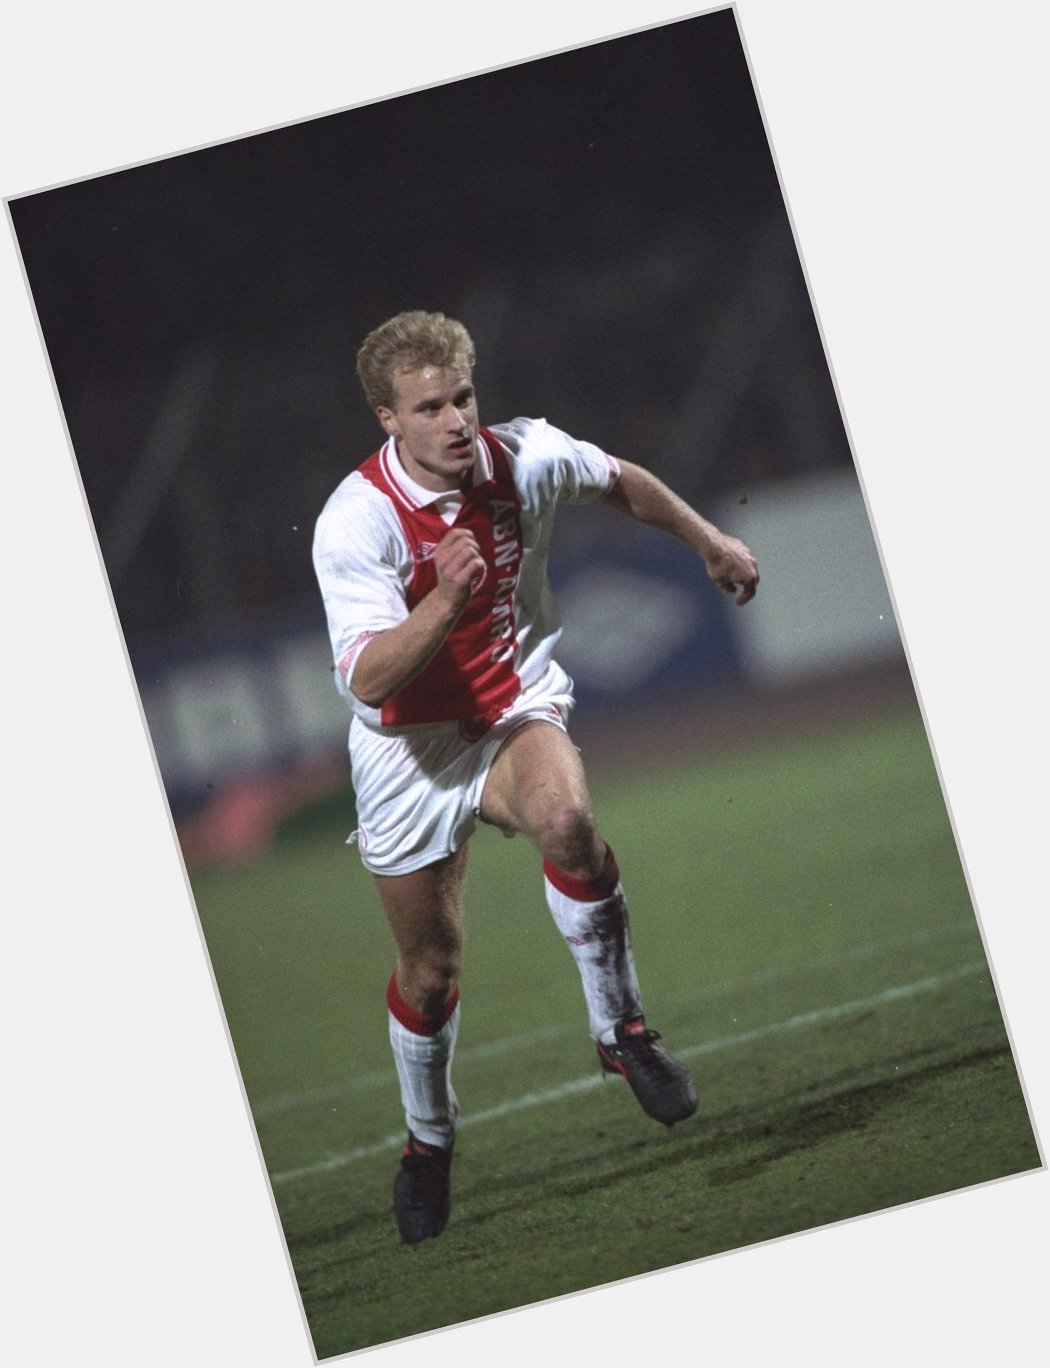  in 1969, a Dutch master was born...

Wish Dennis Bergkamp a happy birthday!    